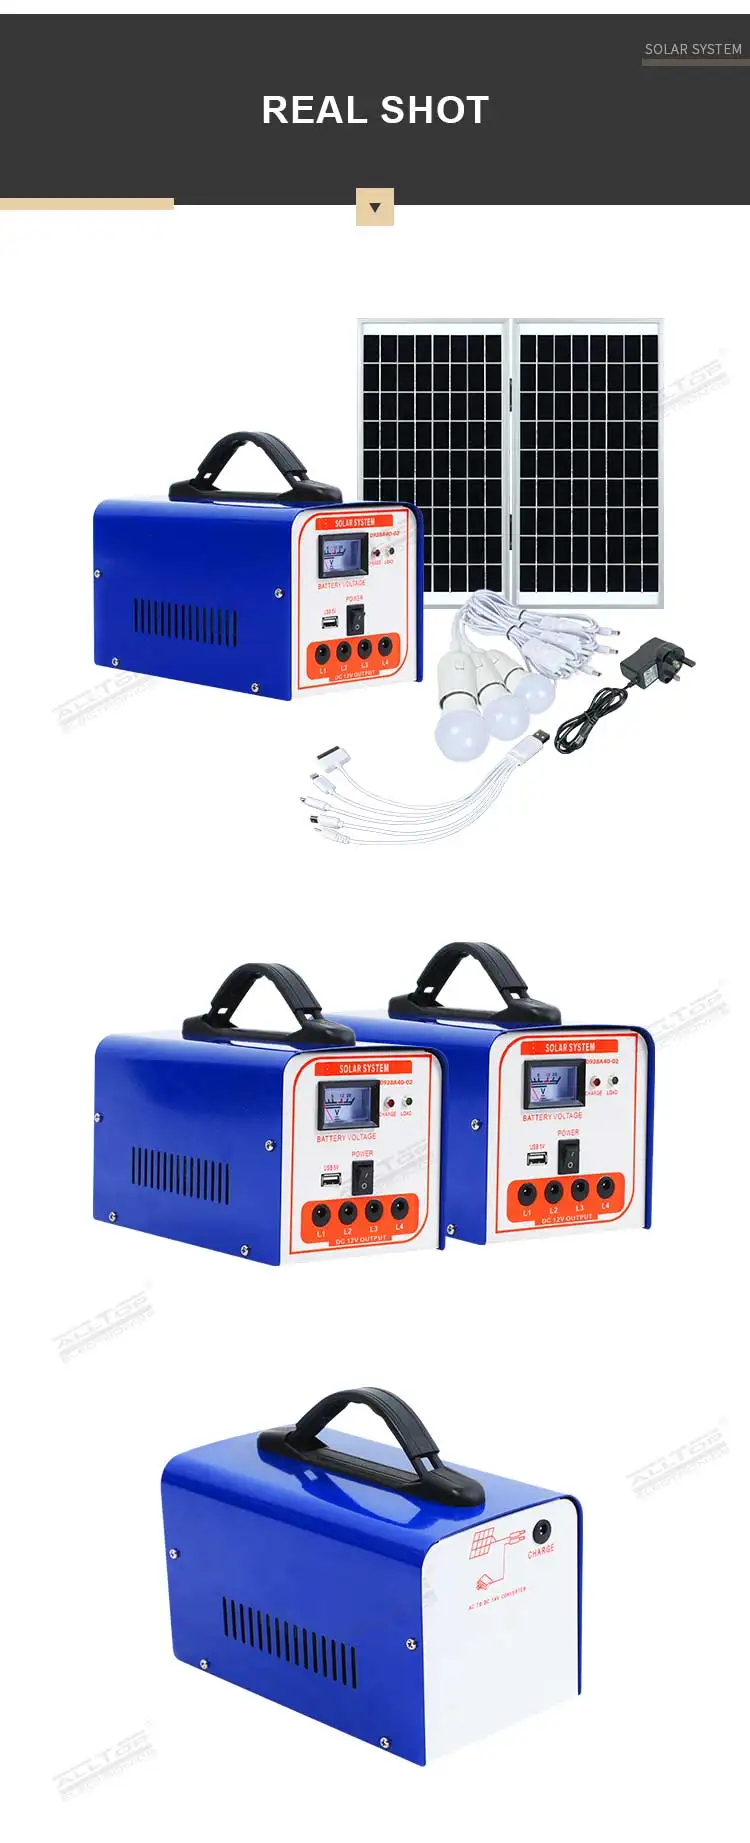 ALLTOP Hot selling portable DC solar kits 40w mini solar power lighting system for home